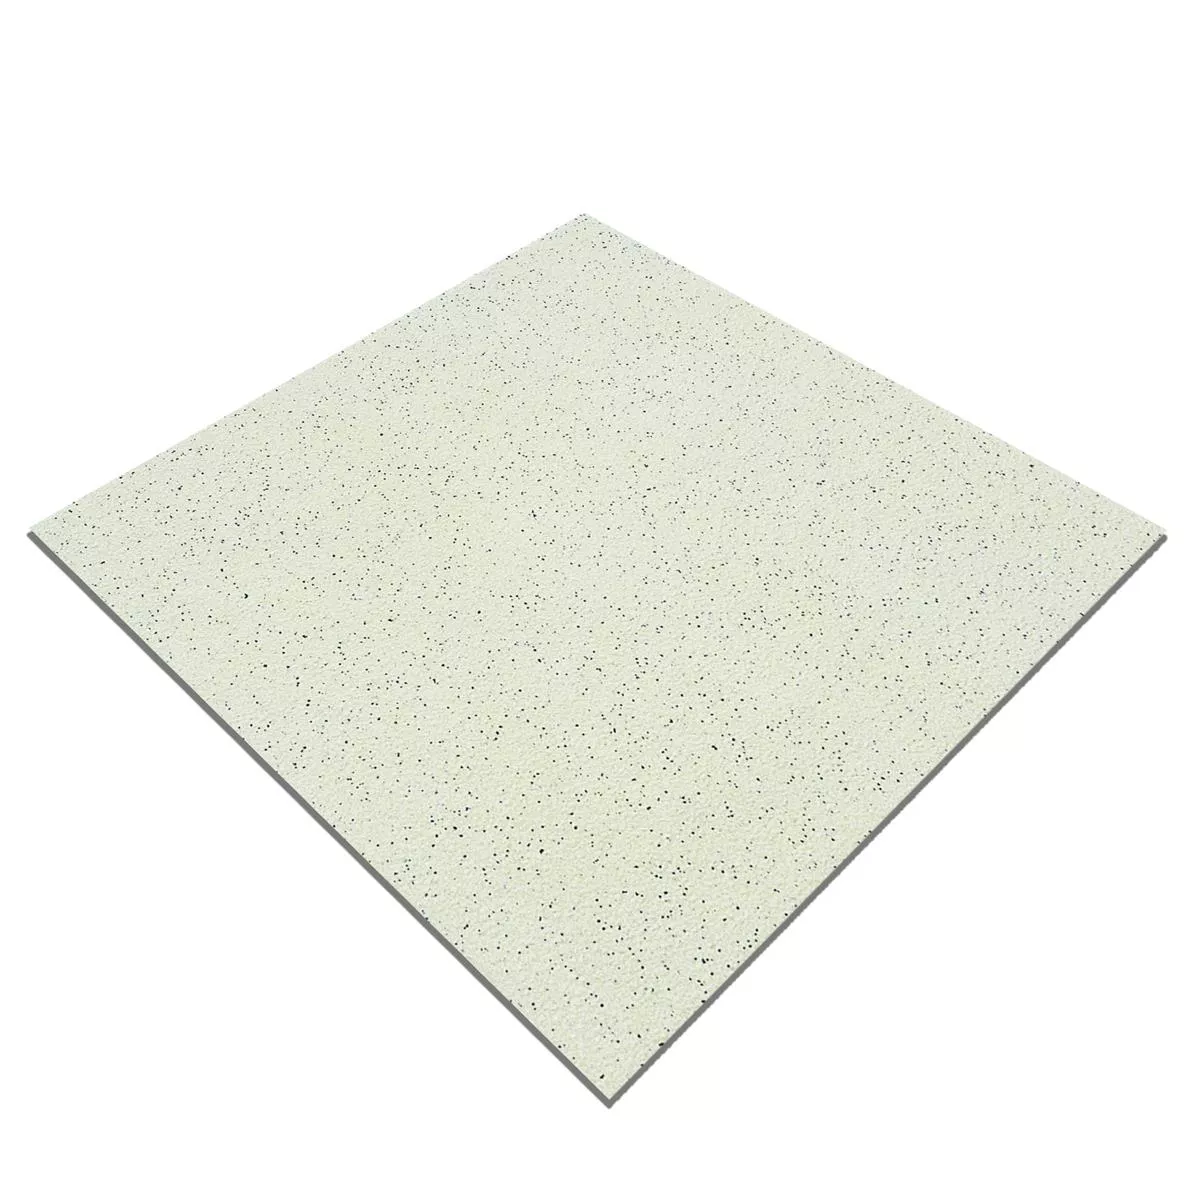 Sample Floor Tiles Fine Grain R10/A Creme 30x30cm